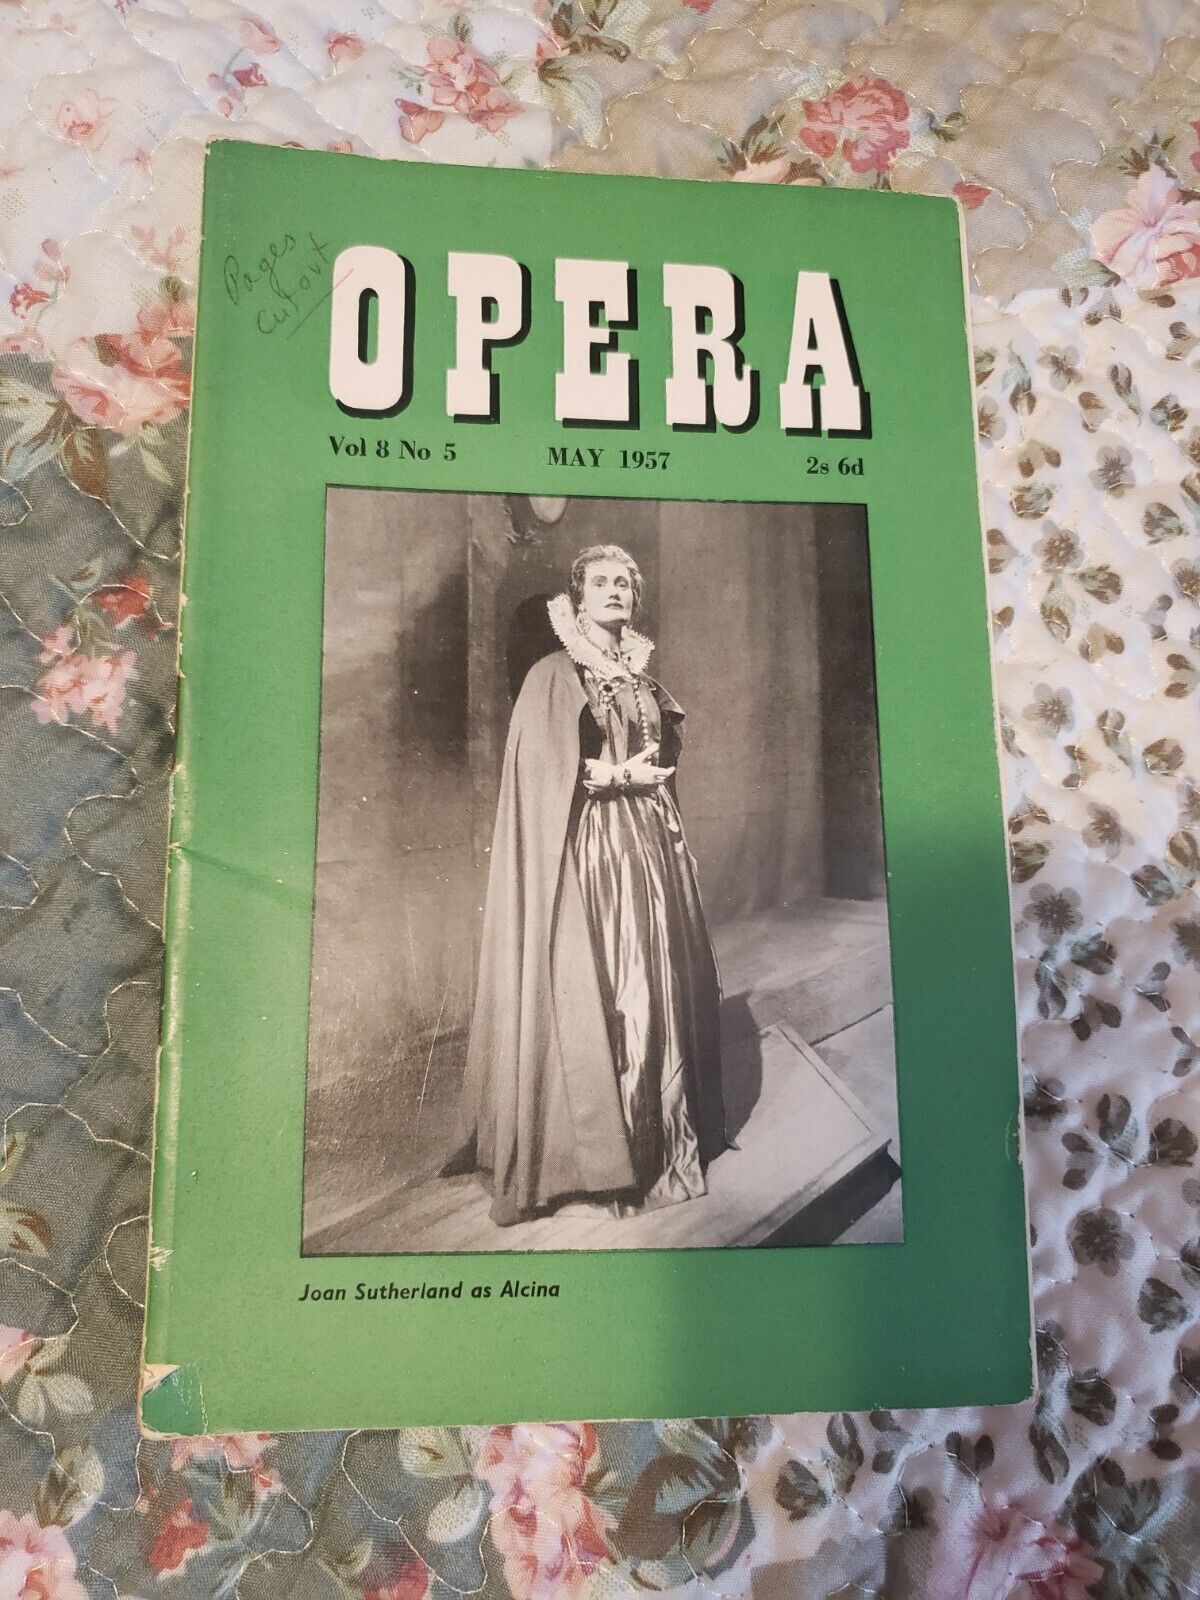 Opera  at Covent Garden Joan Sutherland as Alcina